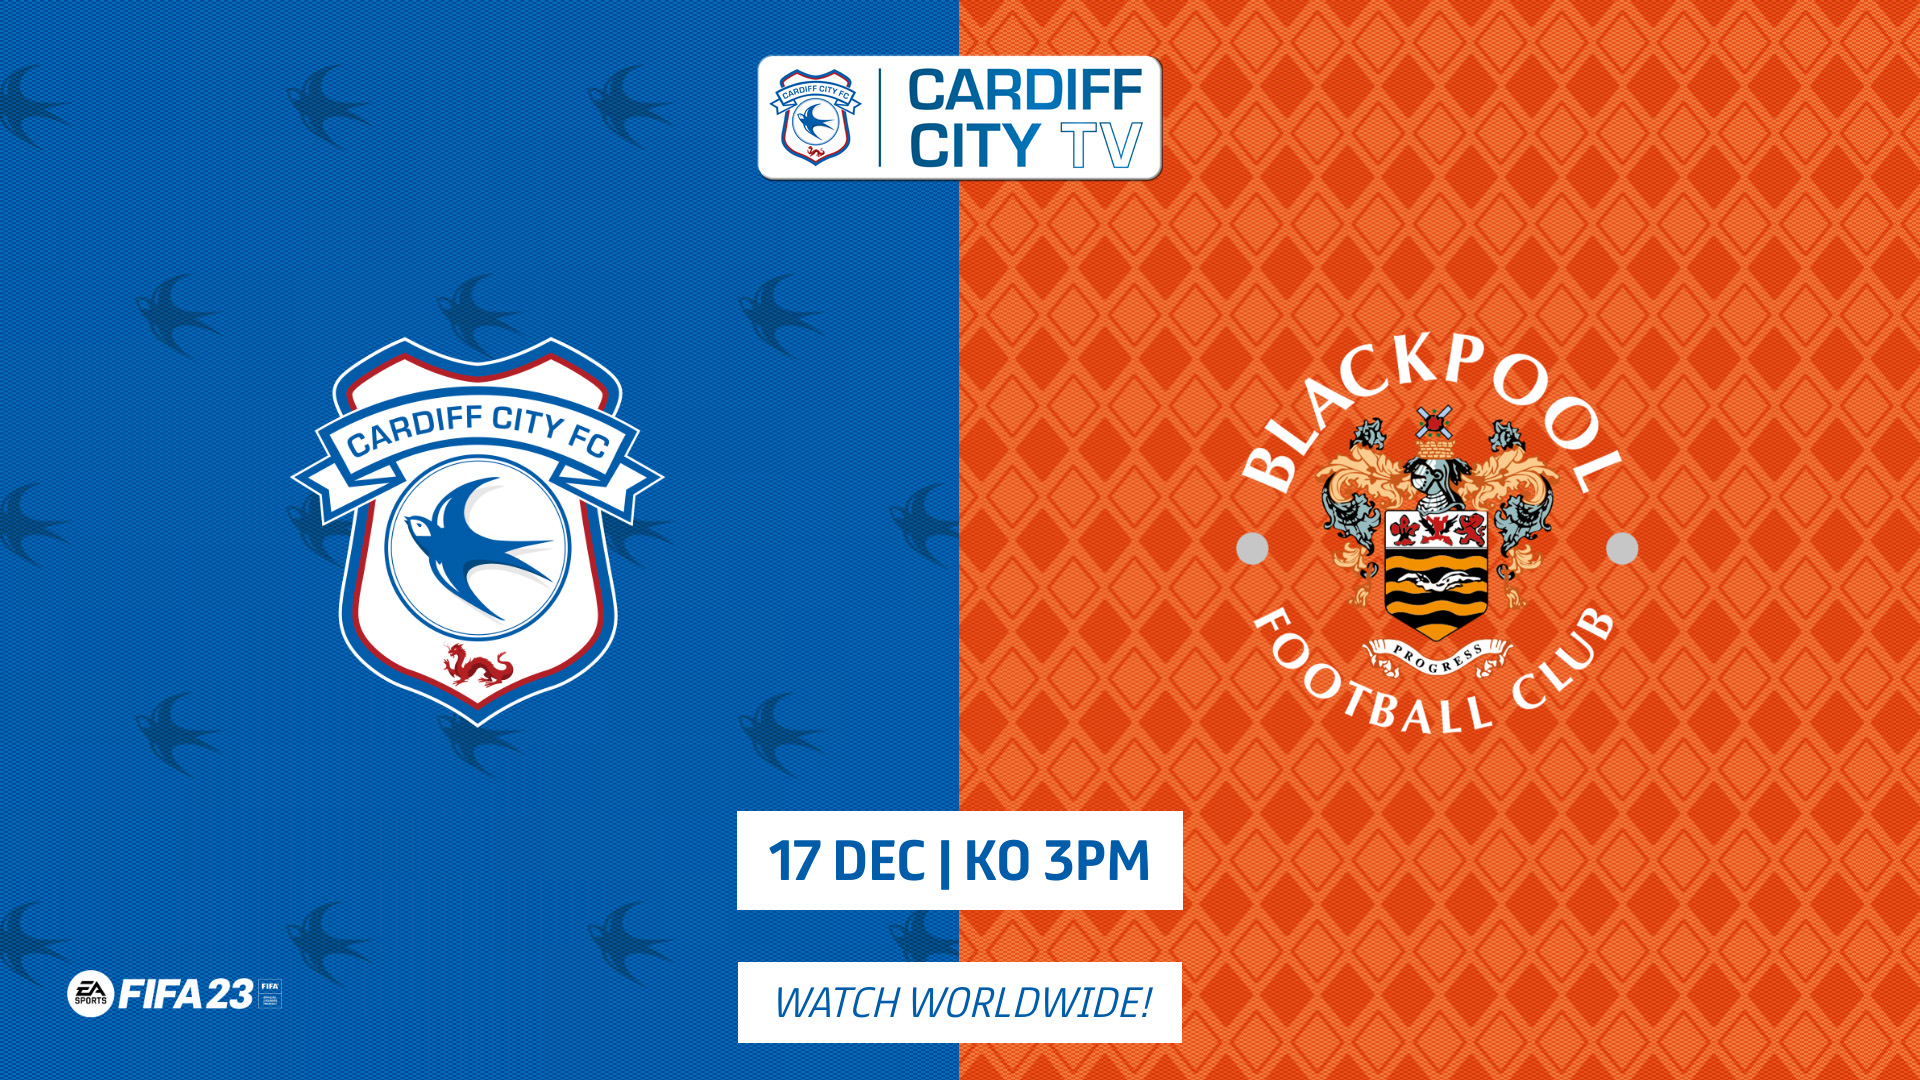 Cardiff City vs. Blackpool | Cardiff City TV